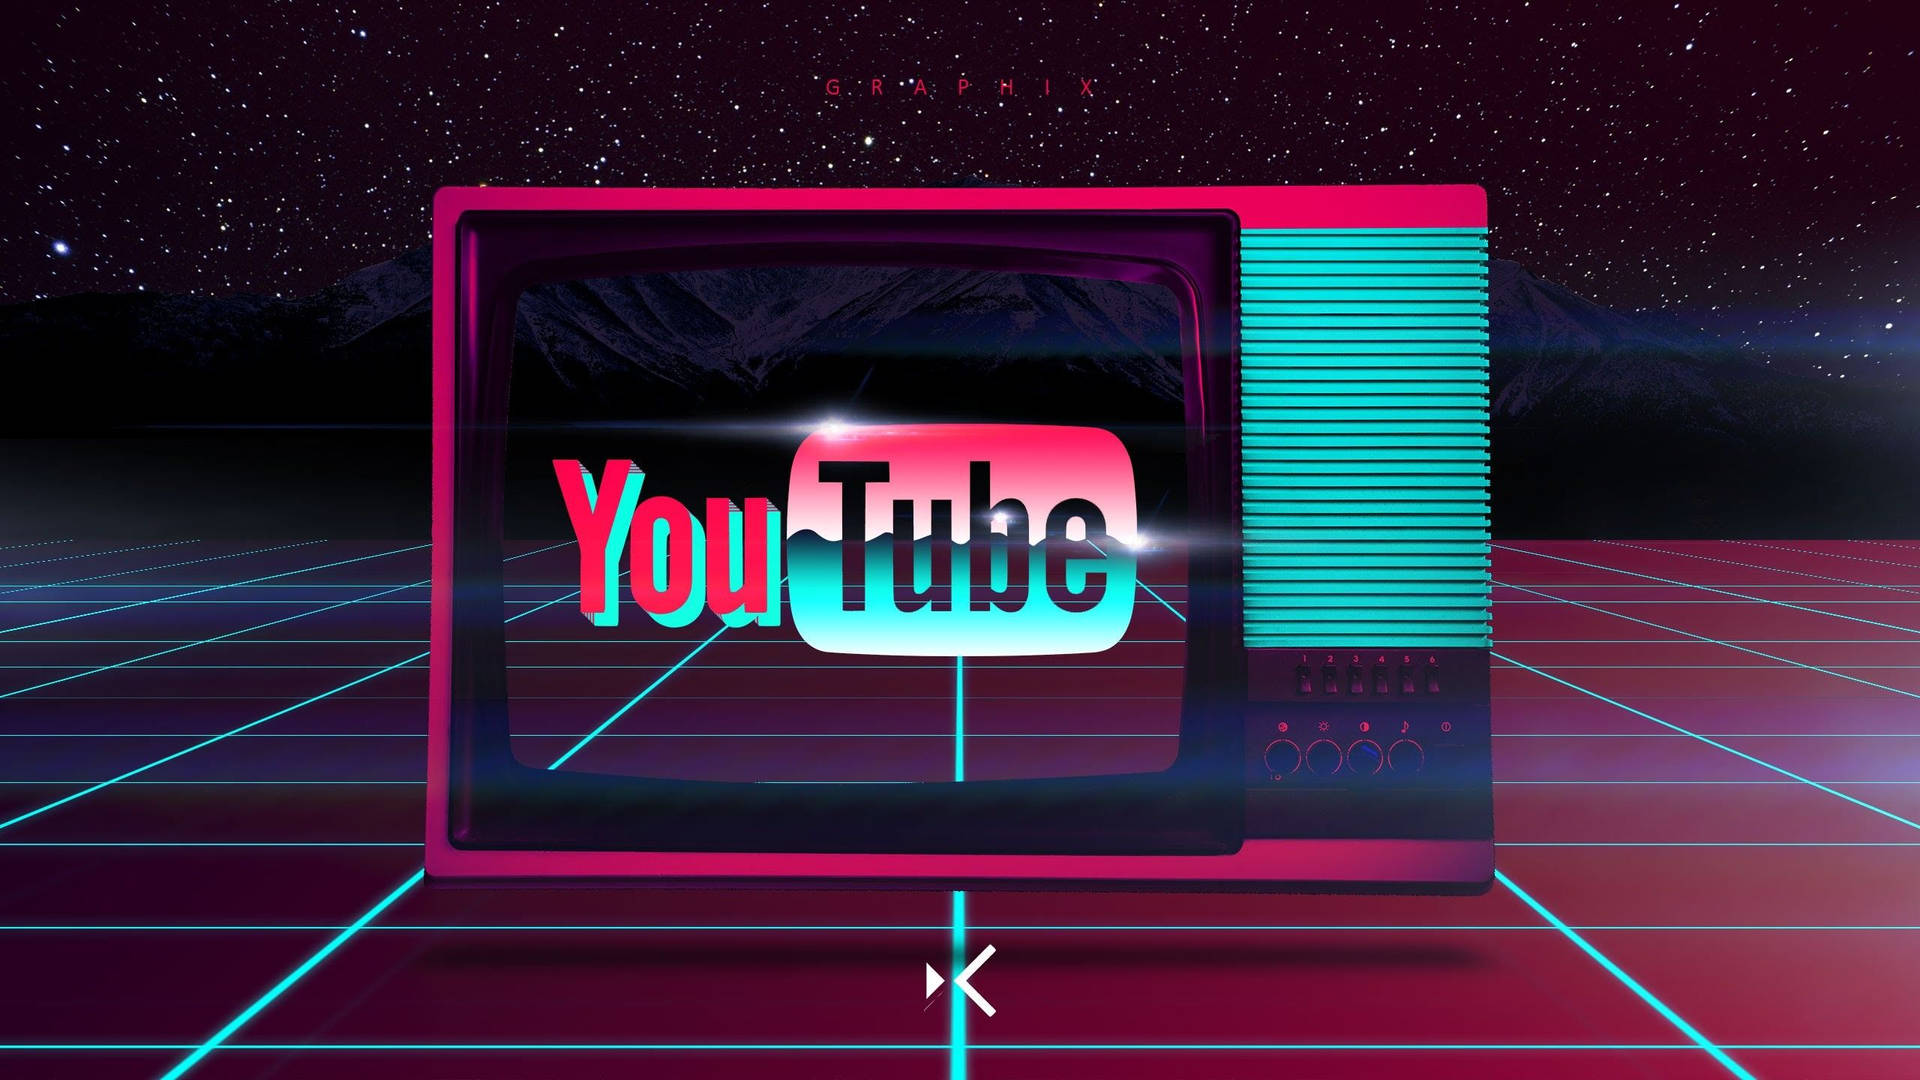 Youtube Logo On Graphic Galaxy